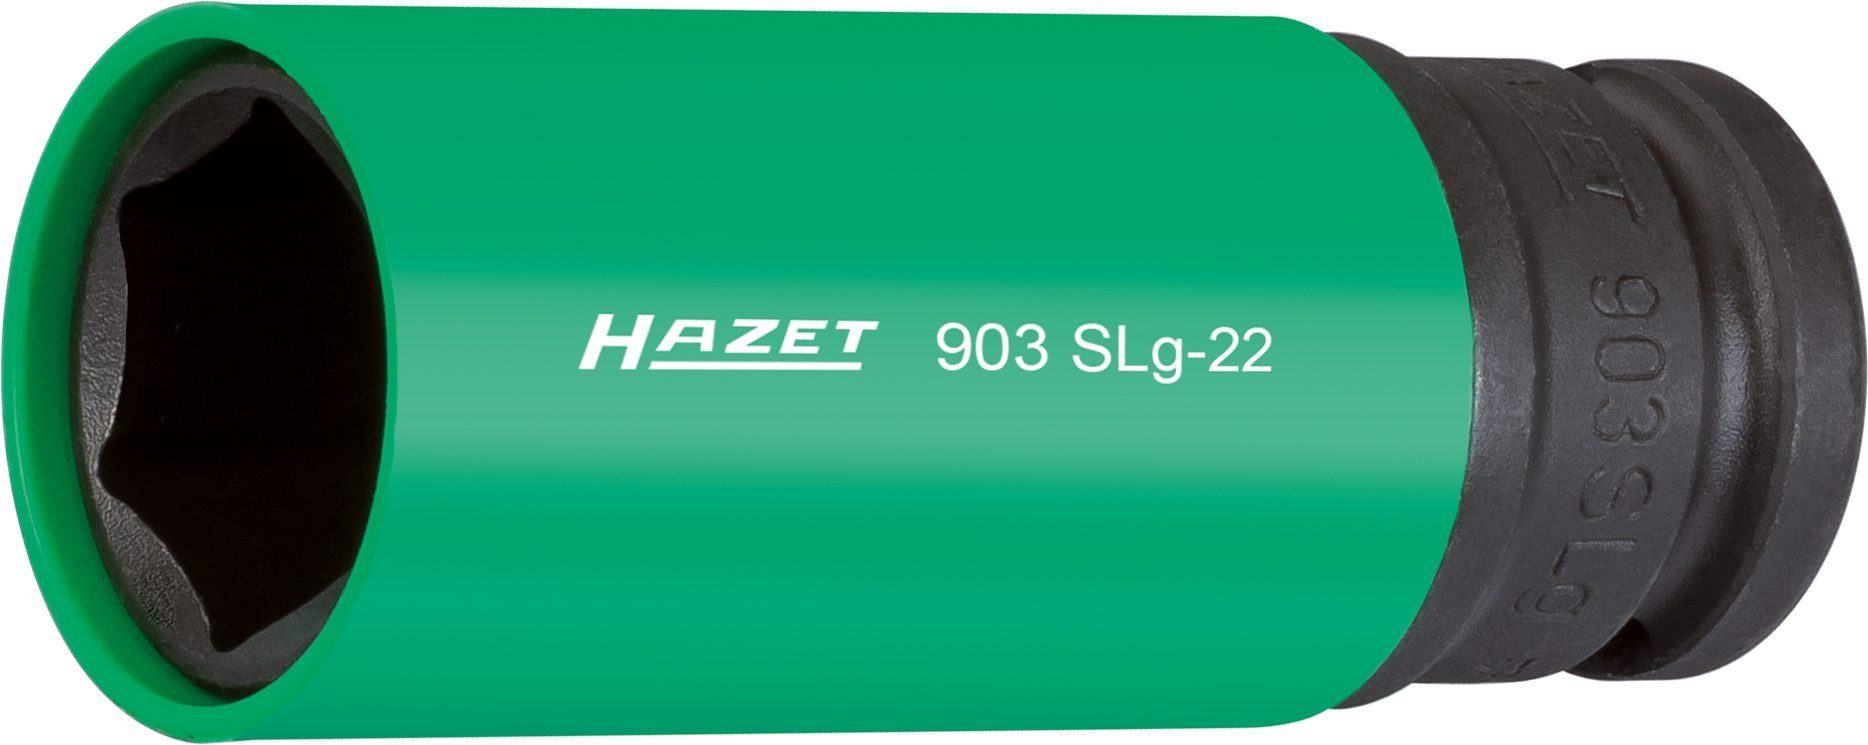 HAZET Steckschlüssel (6kt), 903SLG-22 Hazet Kraft-Steckschlüssel-Einsatz